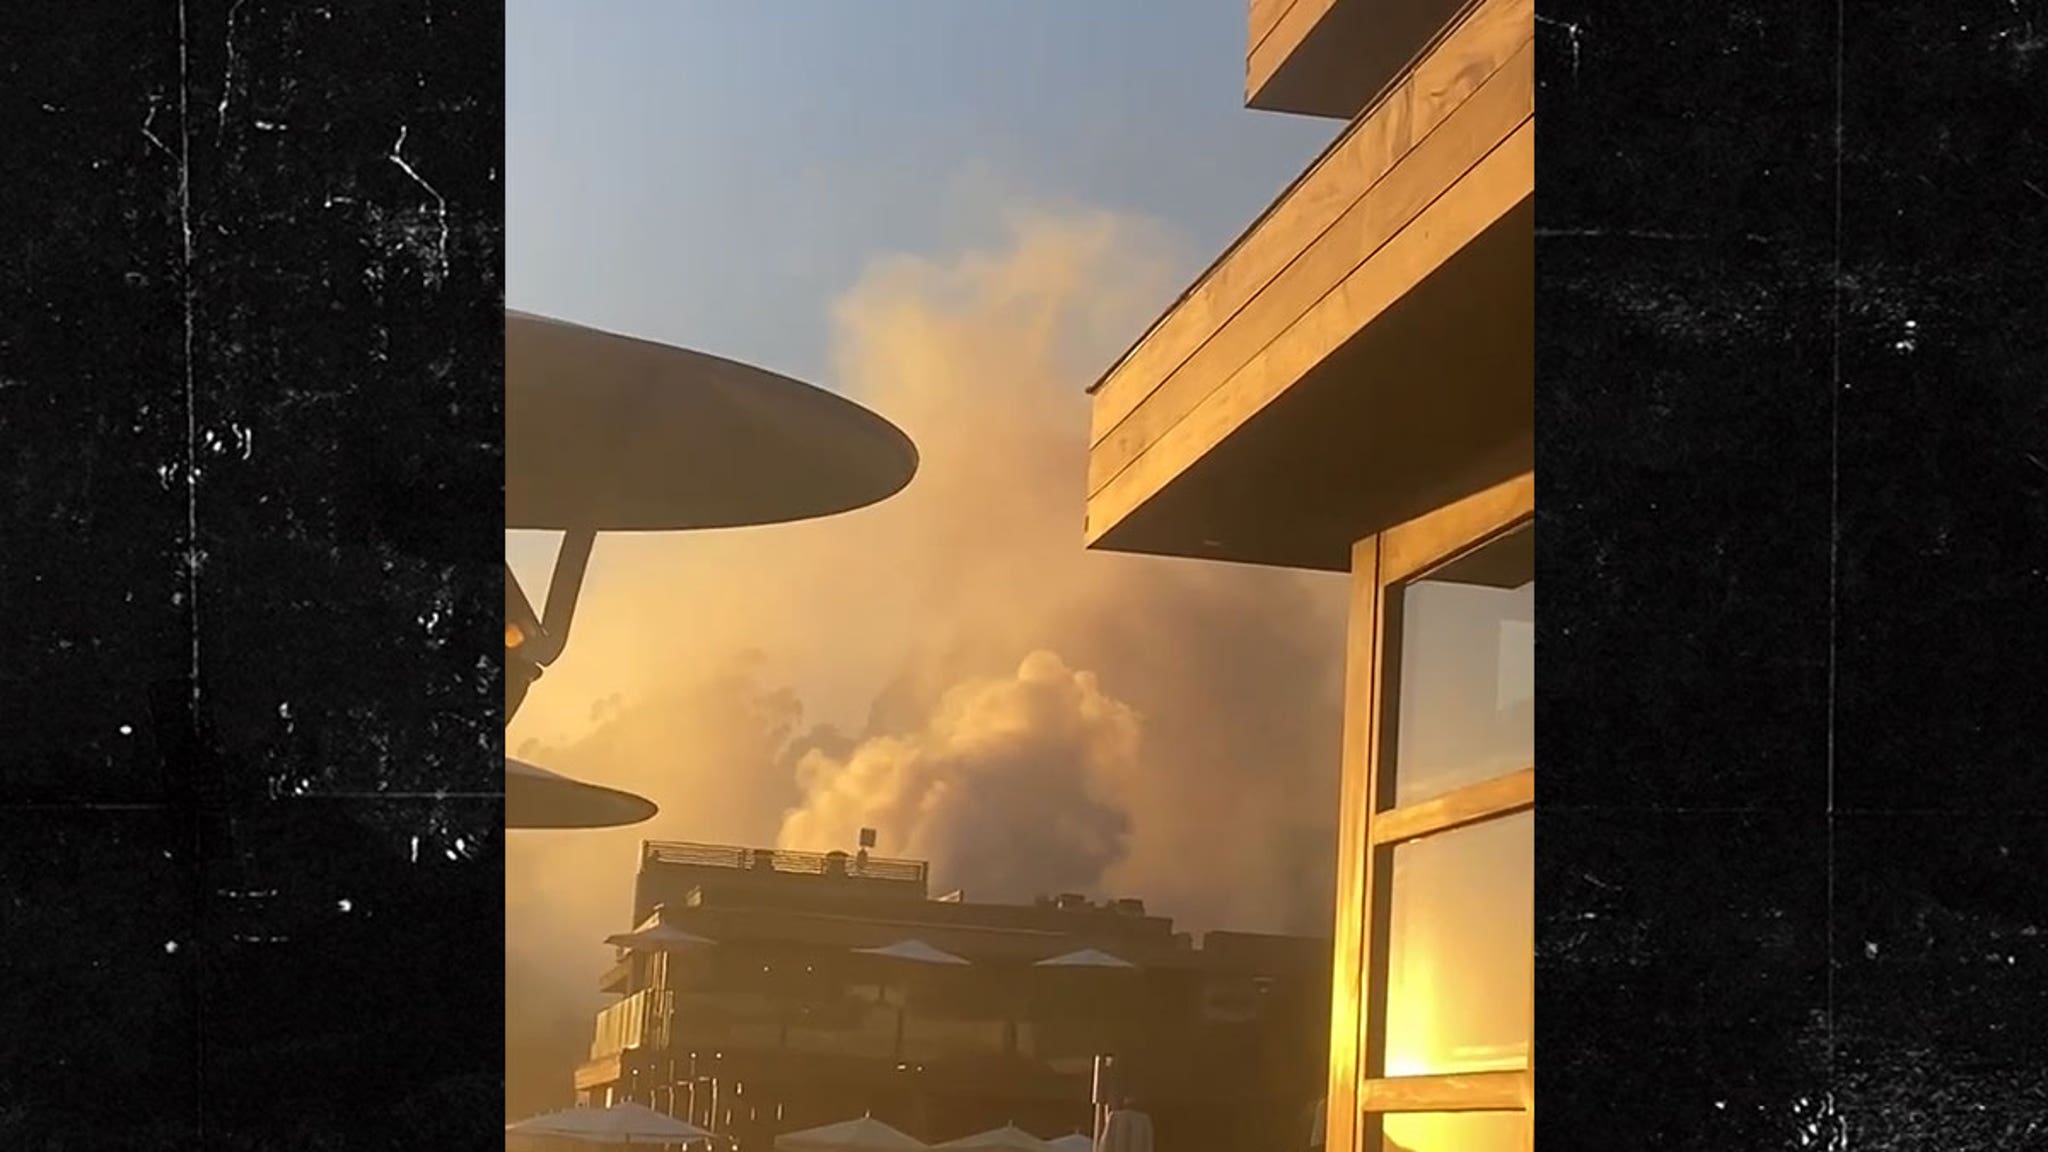 Fire Breaks Out at SoHo Malibu, Celeb Hot Spot